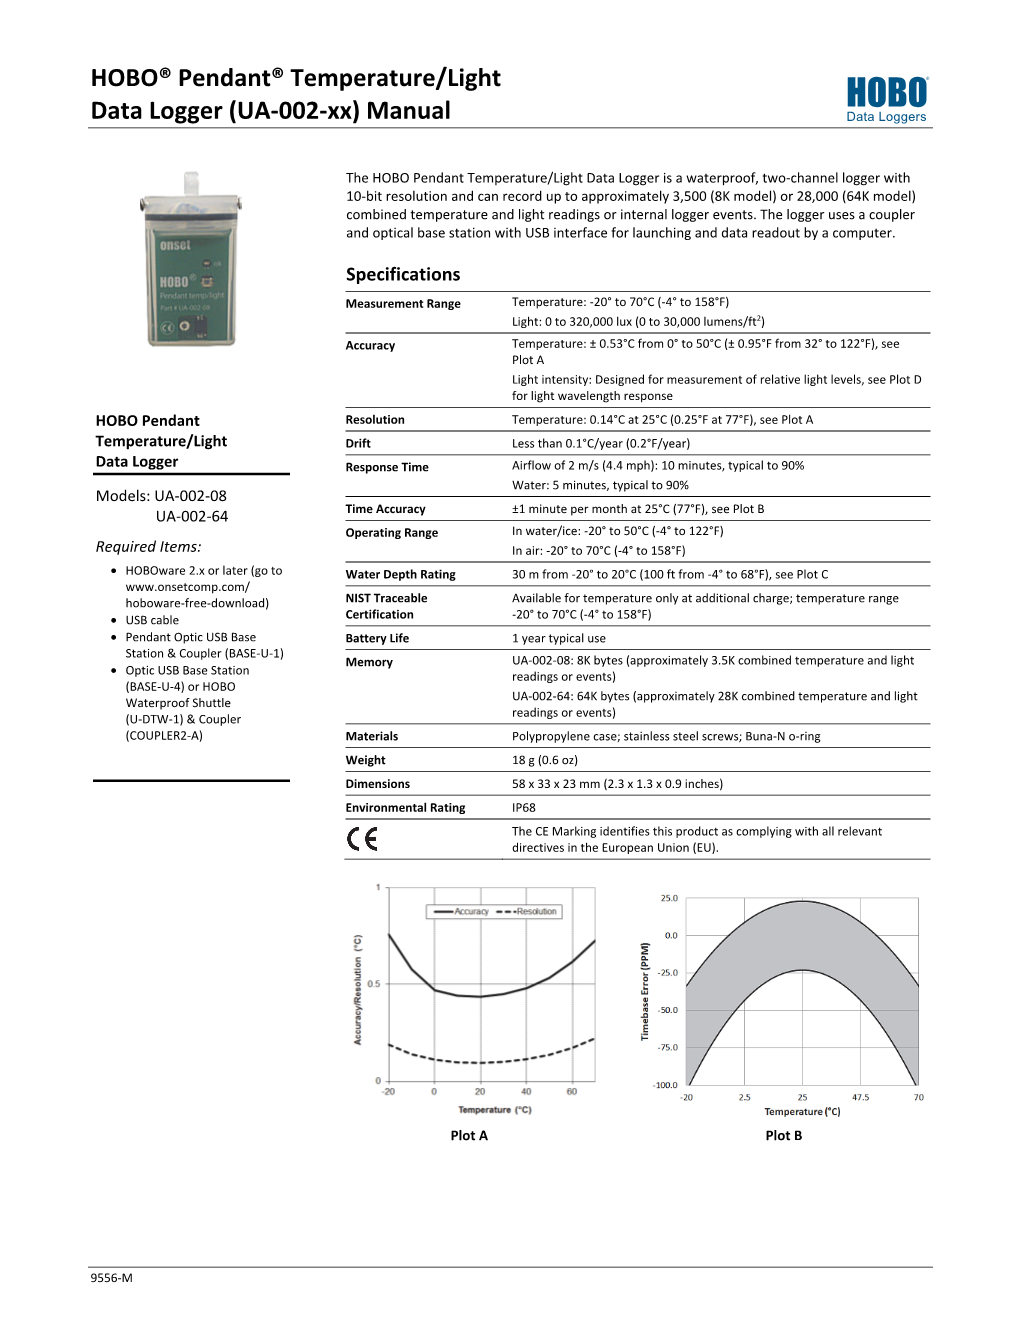 HOBO Pendant Temperature/Light Data Logger (UA-002-Xx) Manual